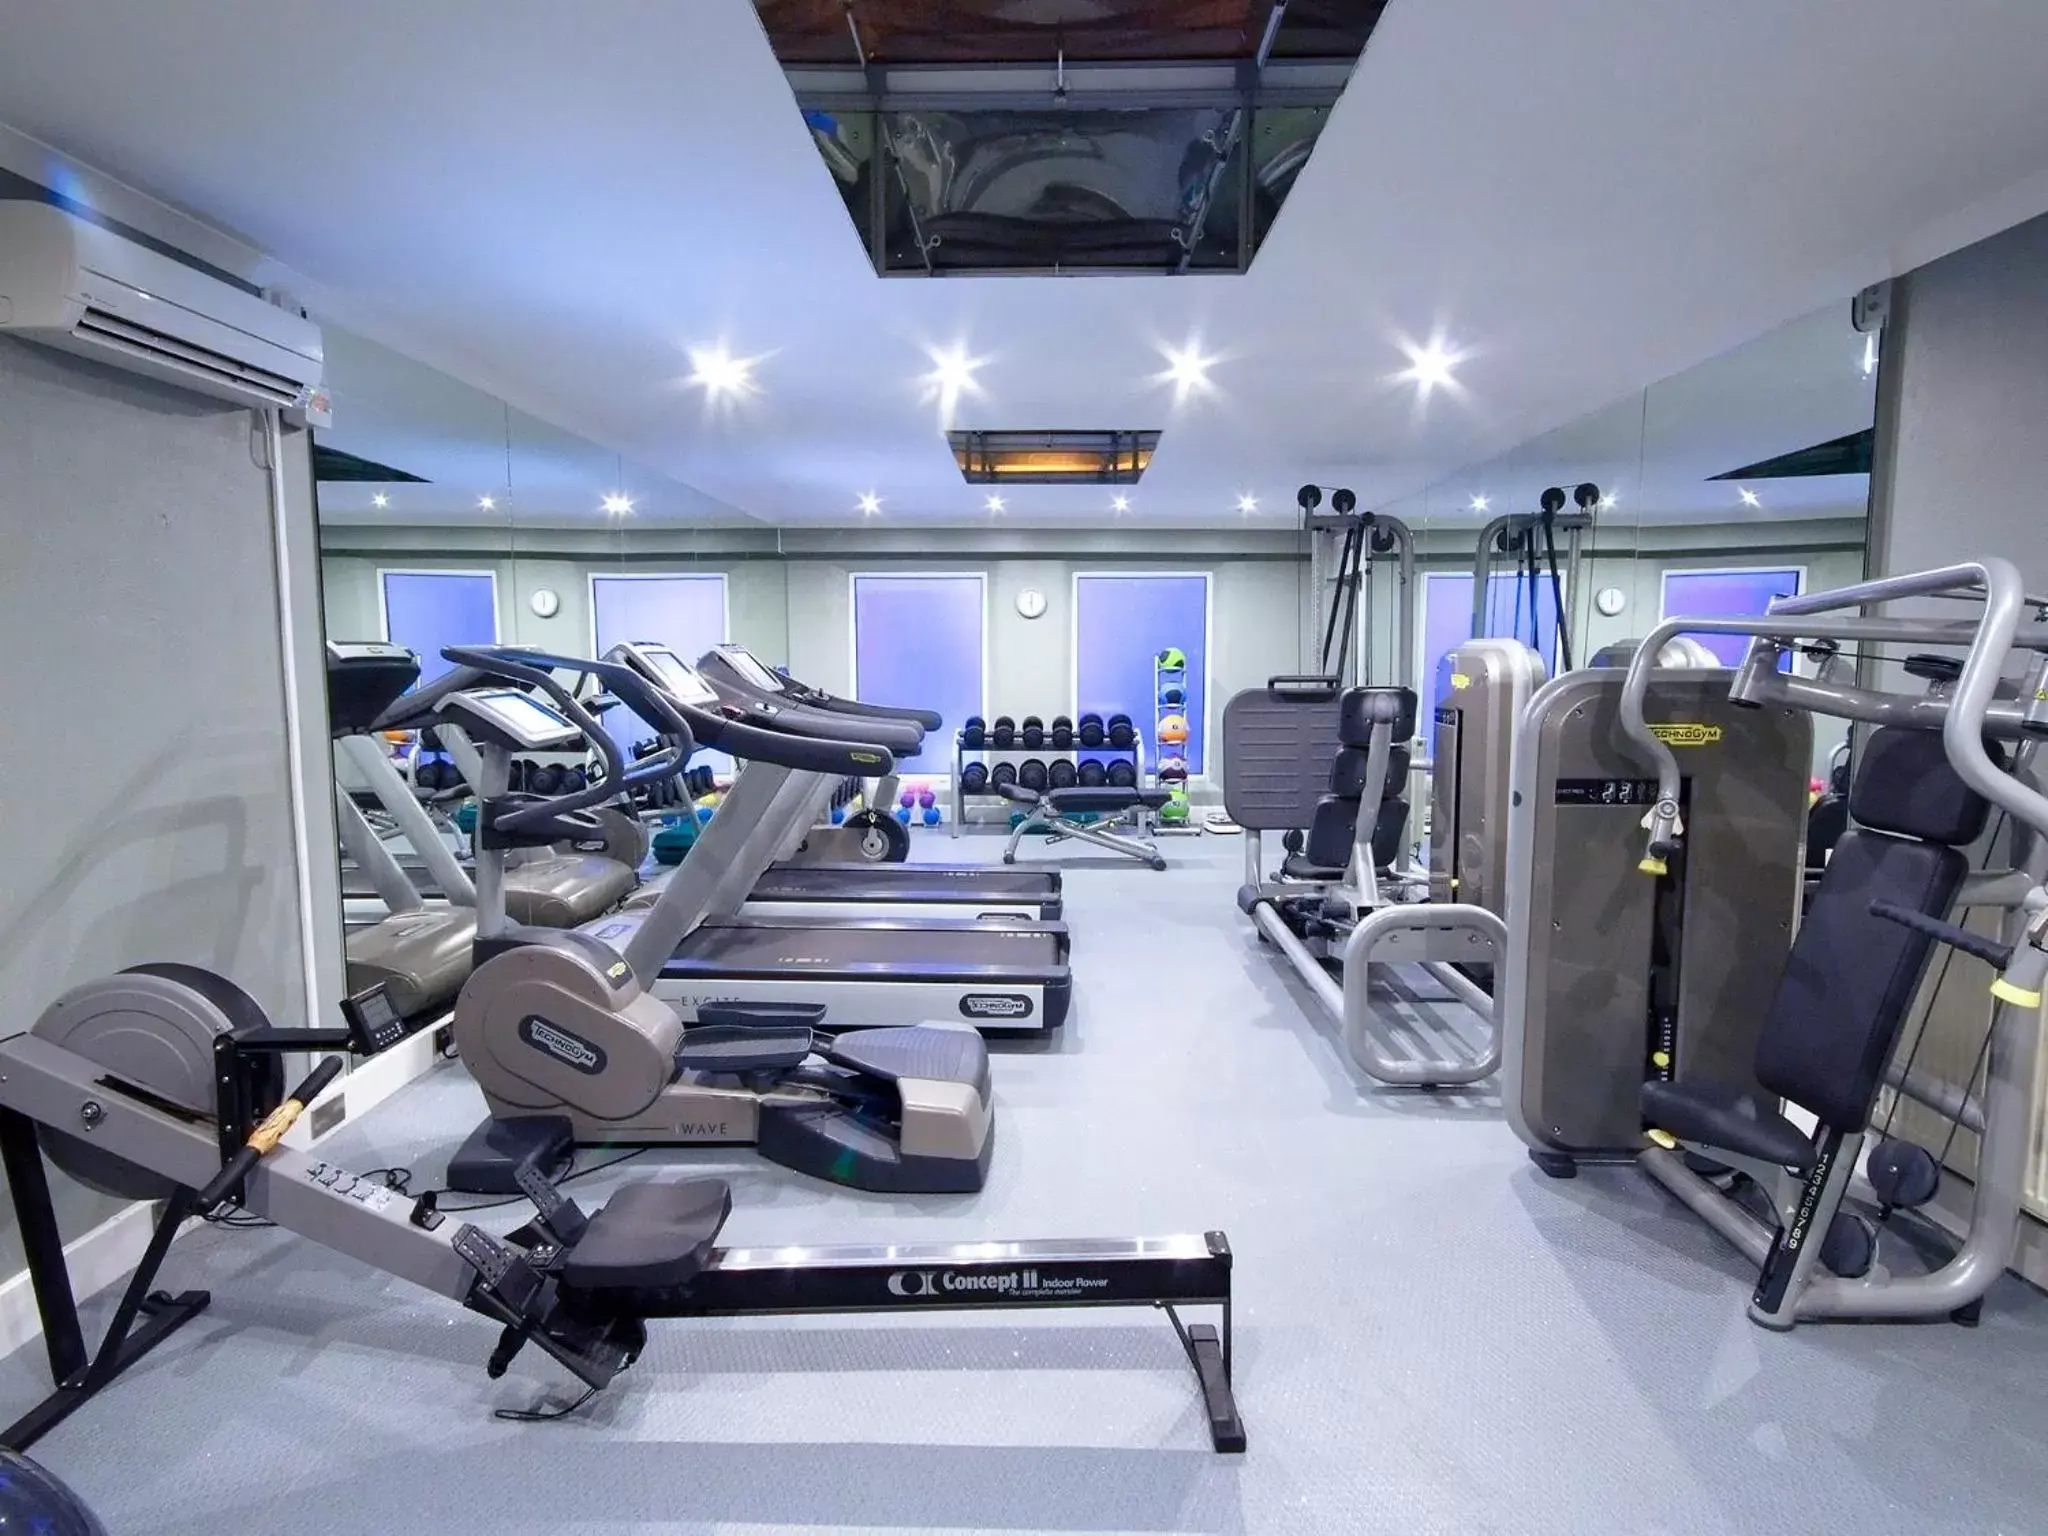 Fitness centre/facilities, Fitness Center/Facilities in Penventon Park Hotel